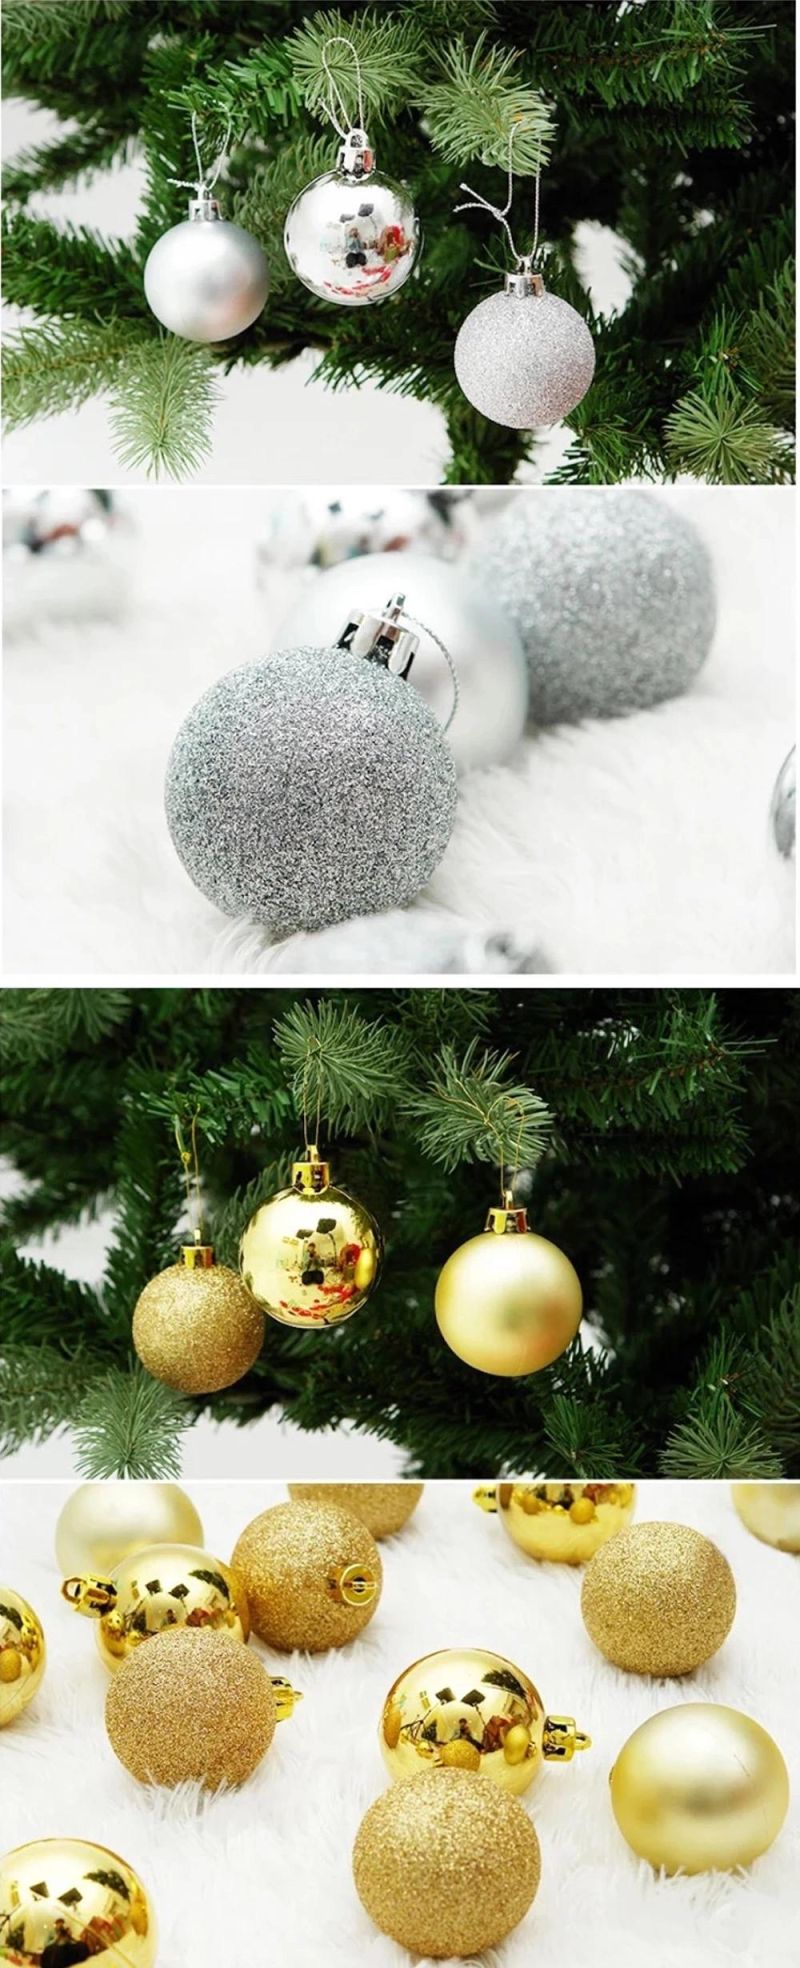 Hot Sale Good Quality Cheap Plastic Christmas Ornaments Ball